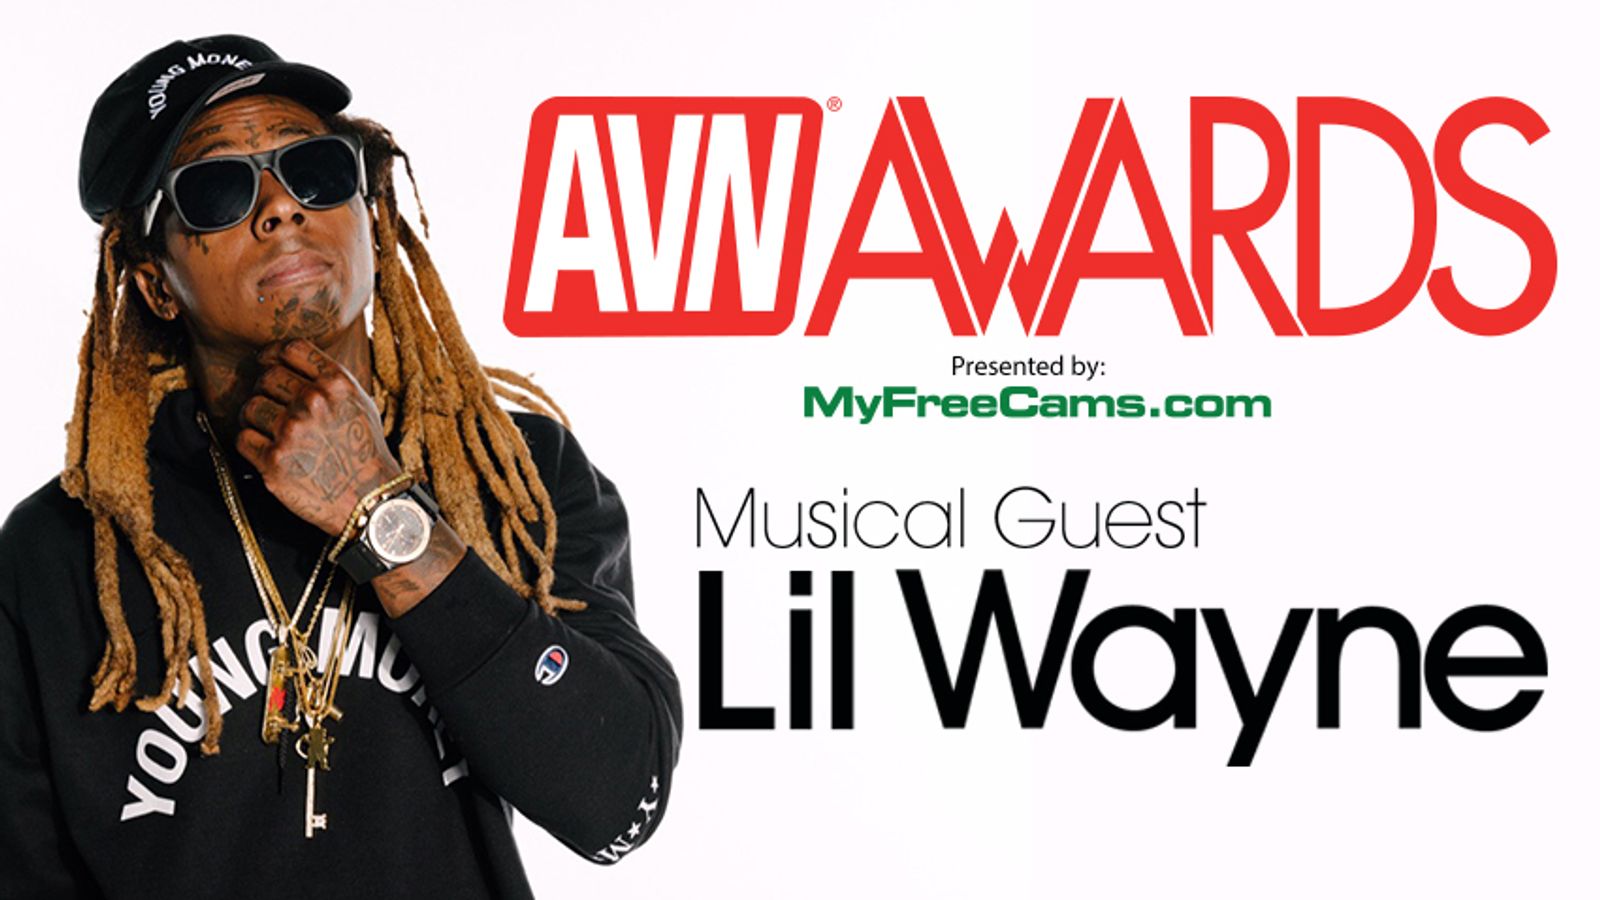 Lil Wayne Named 2018 AVN Awards Musical Guest